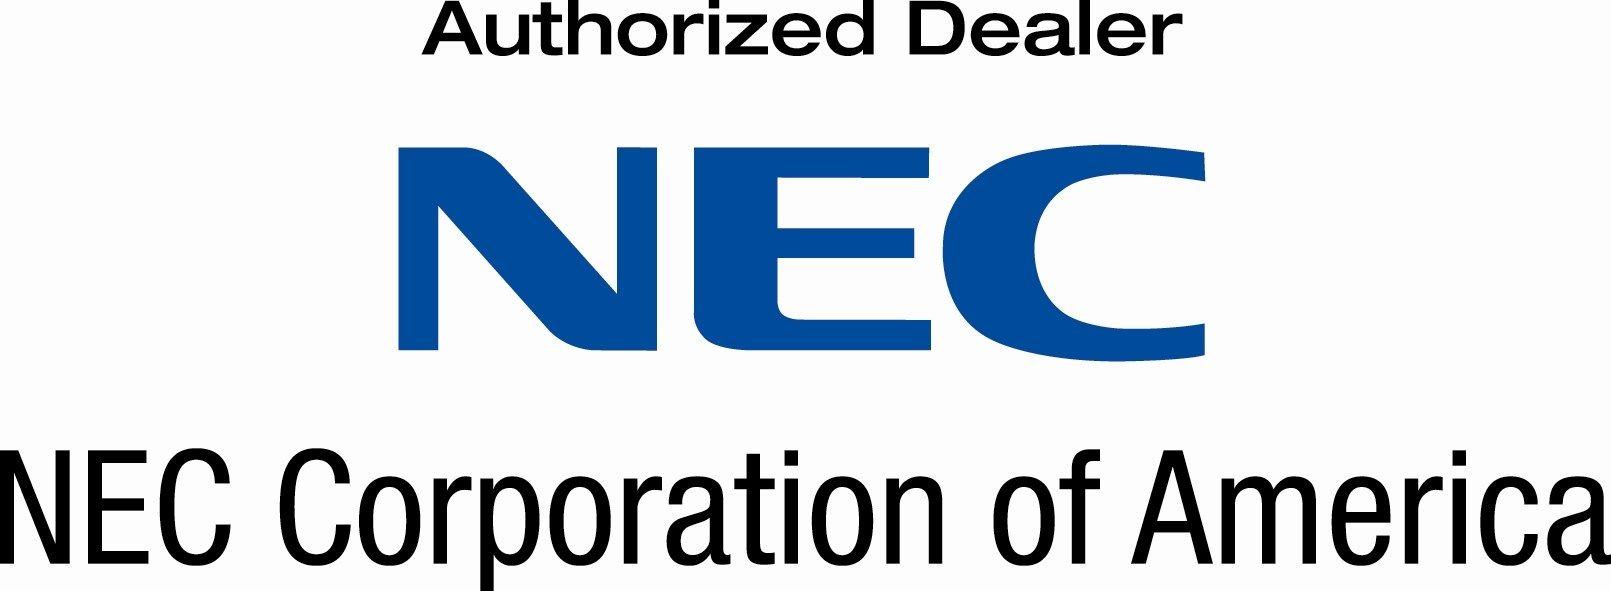 NEC Corporation Logo - NEC Authorized Dealer